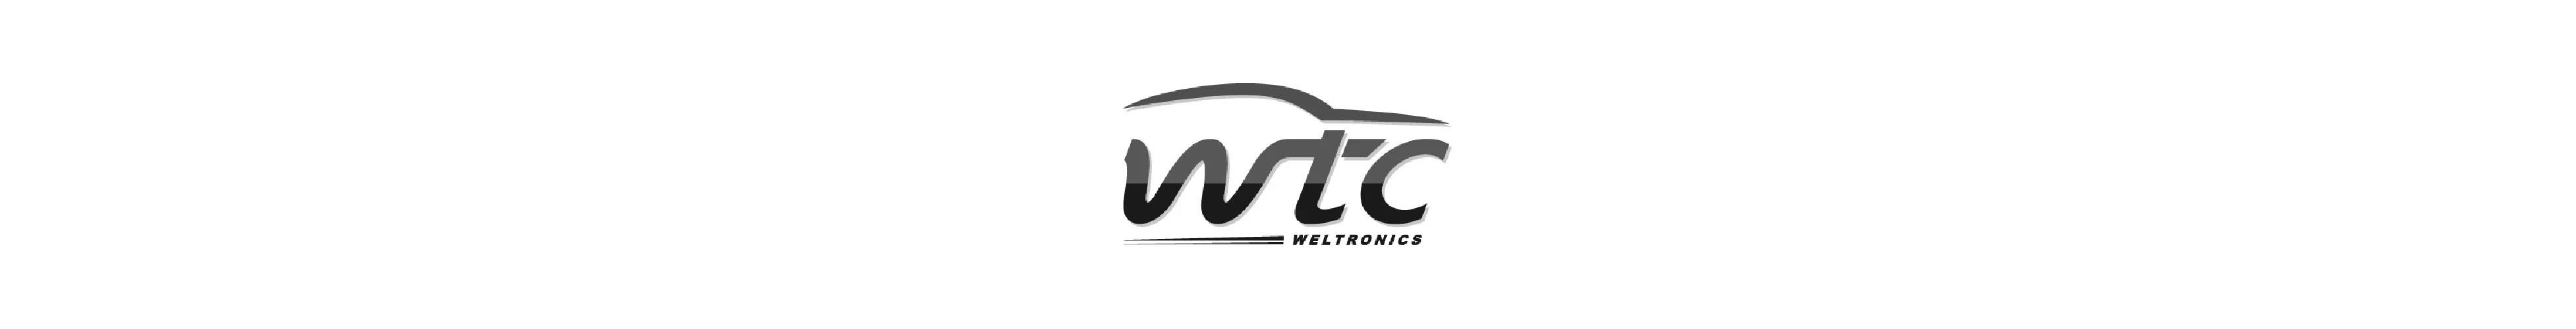 WTC_logo